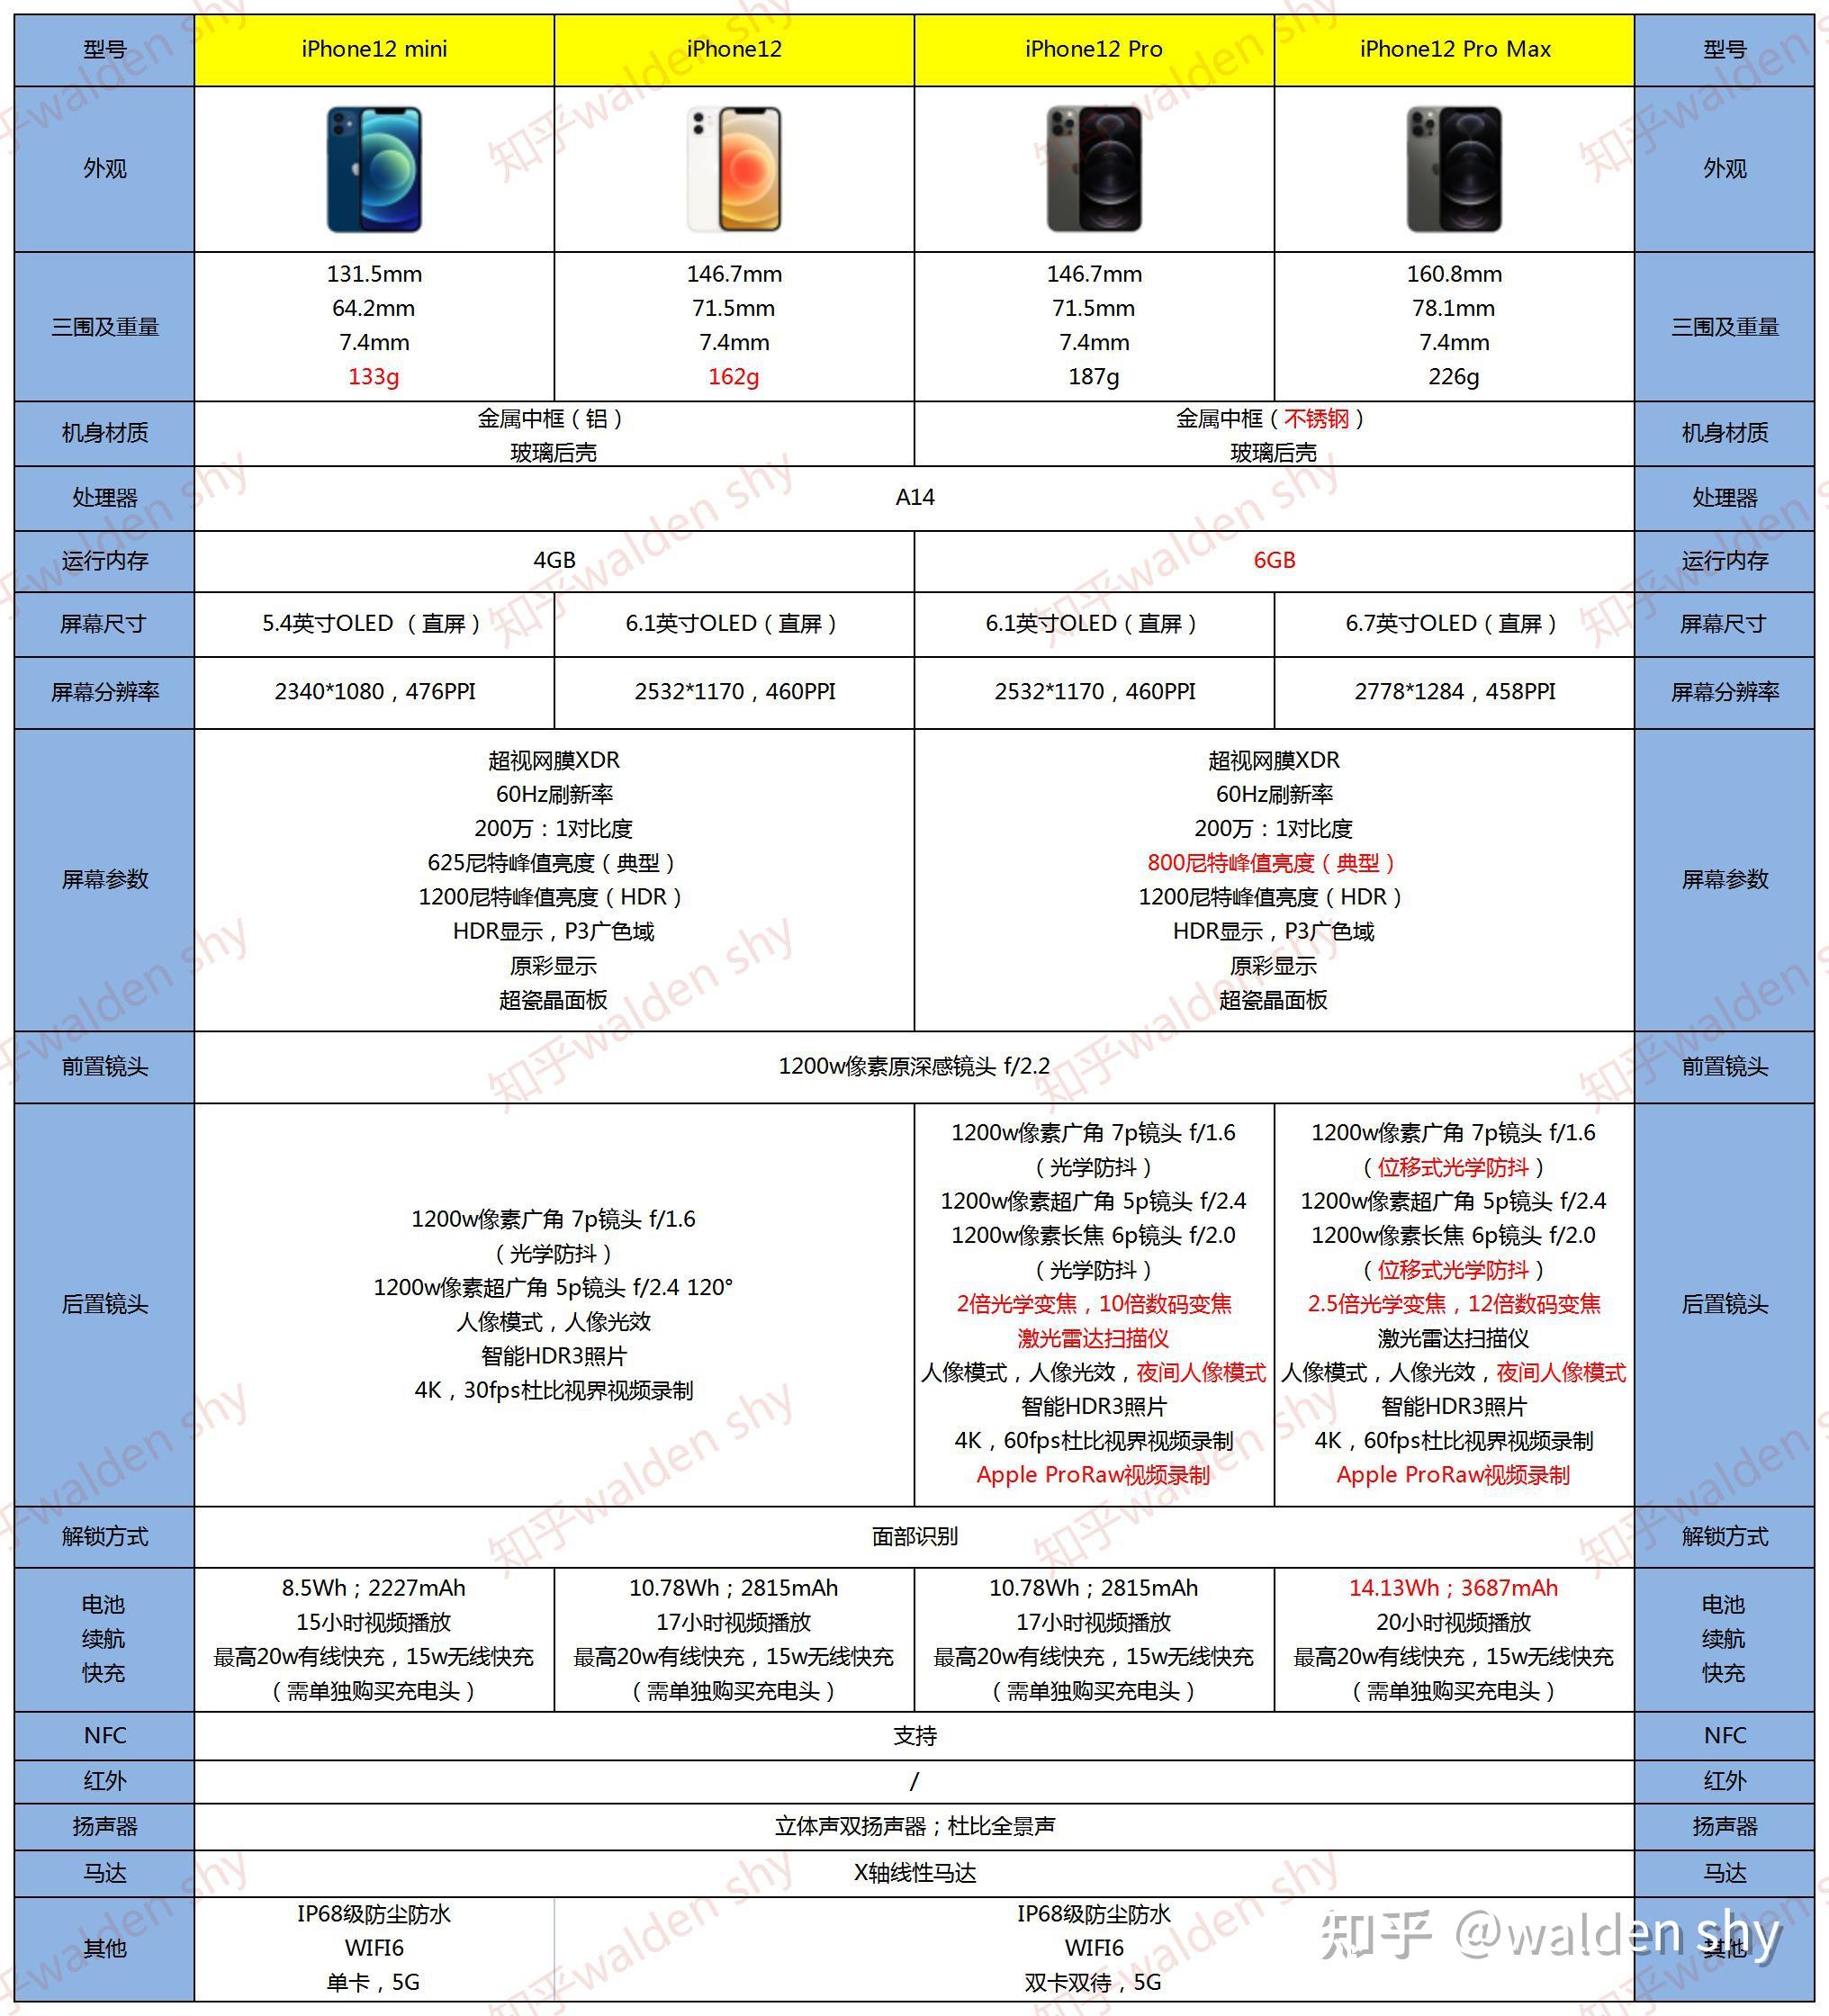 mini,iphone12,iphone12 pro以及iphone 12 pro max四款手机,详细参数